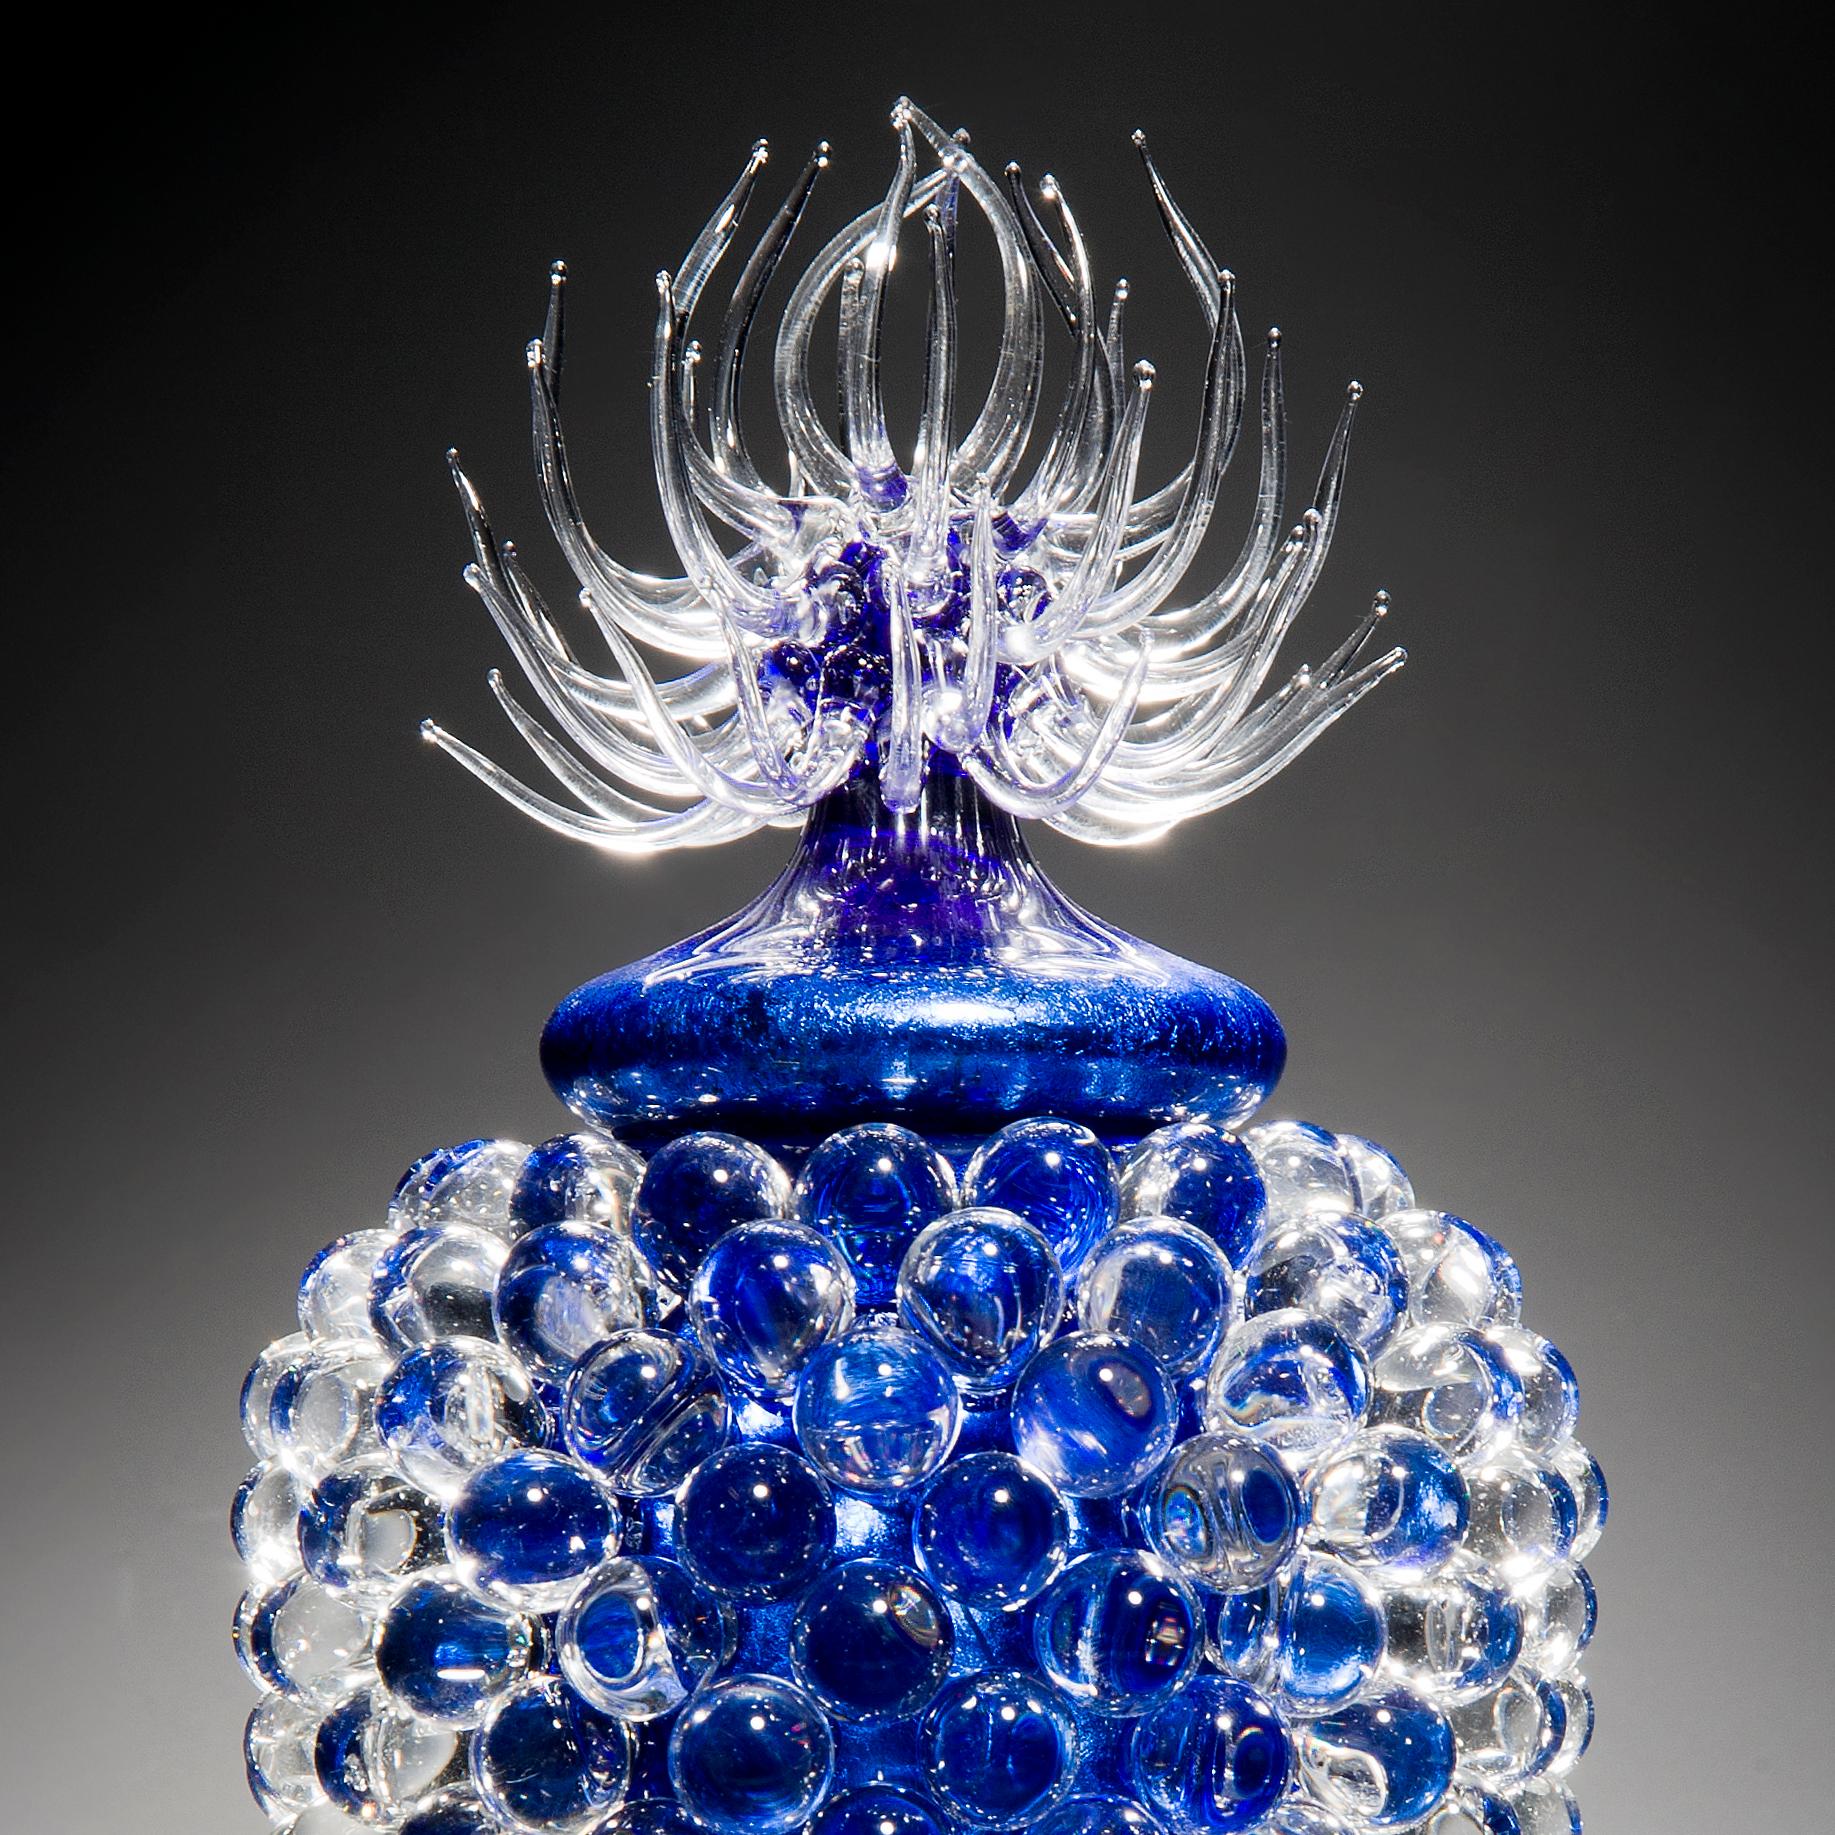 Contemporary Empoli Jar with Thistle, a unique clear & blue glass vessel by James Lethbridge